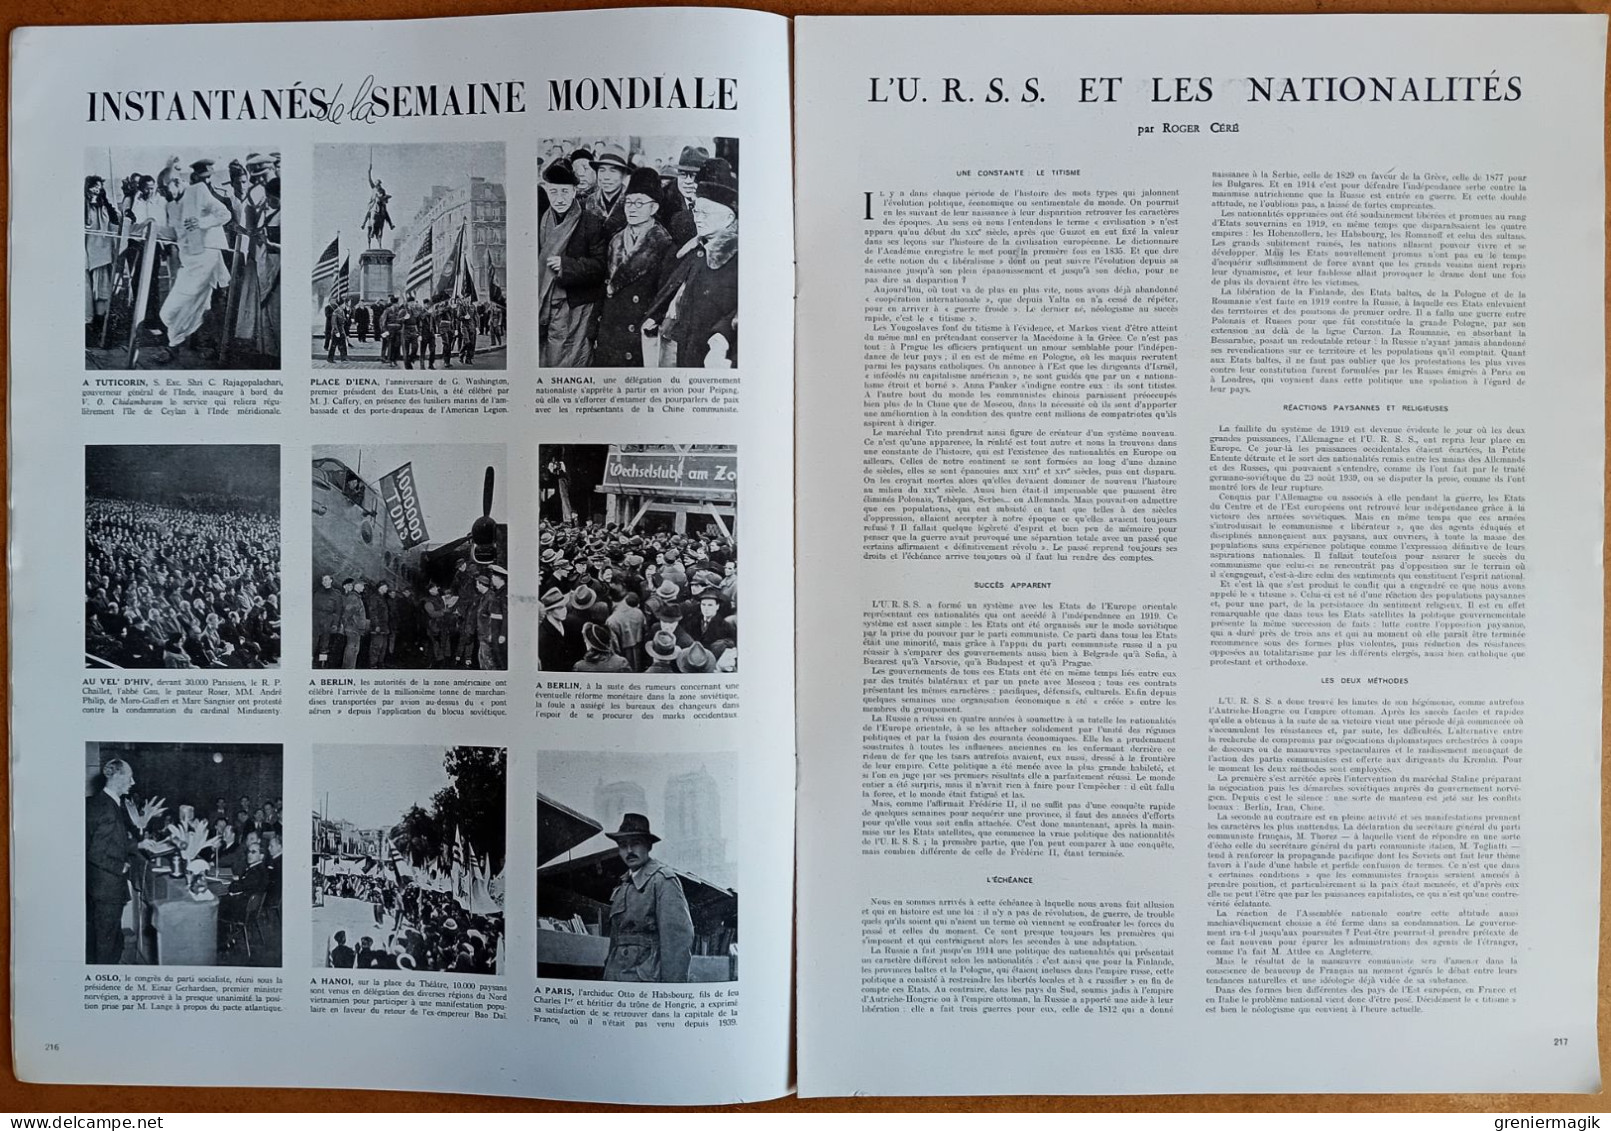 France Illustration N°177 05/03/1949 Népal/Ile Maurice/Joséphine Baker/Supervielle/Proust/Salon Arts Ménagers/Israël - Testi Generali